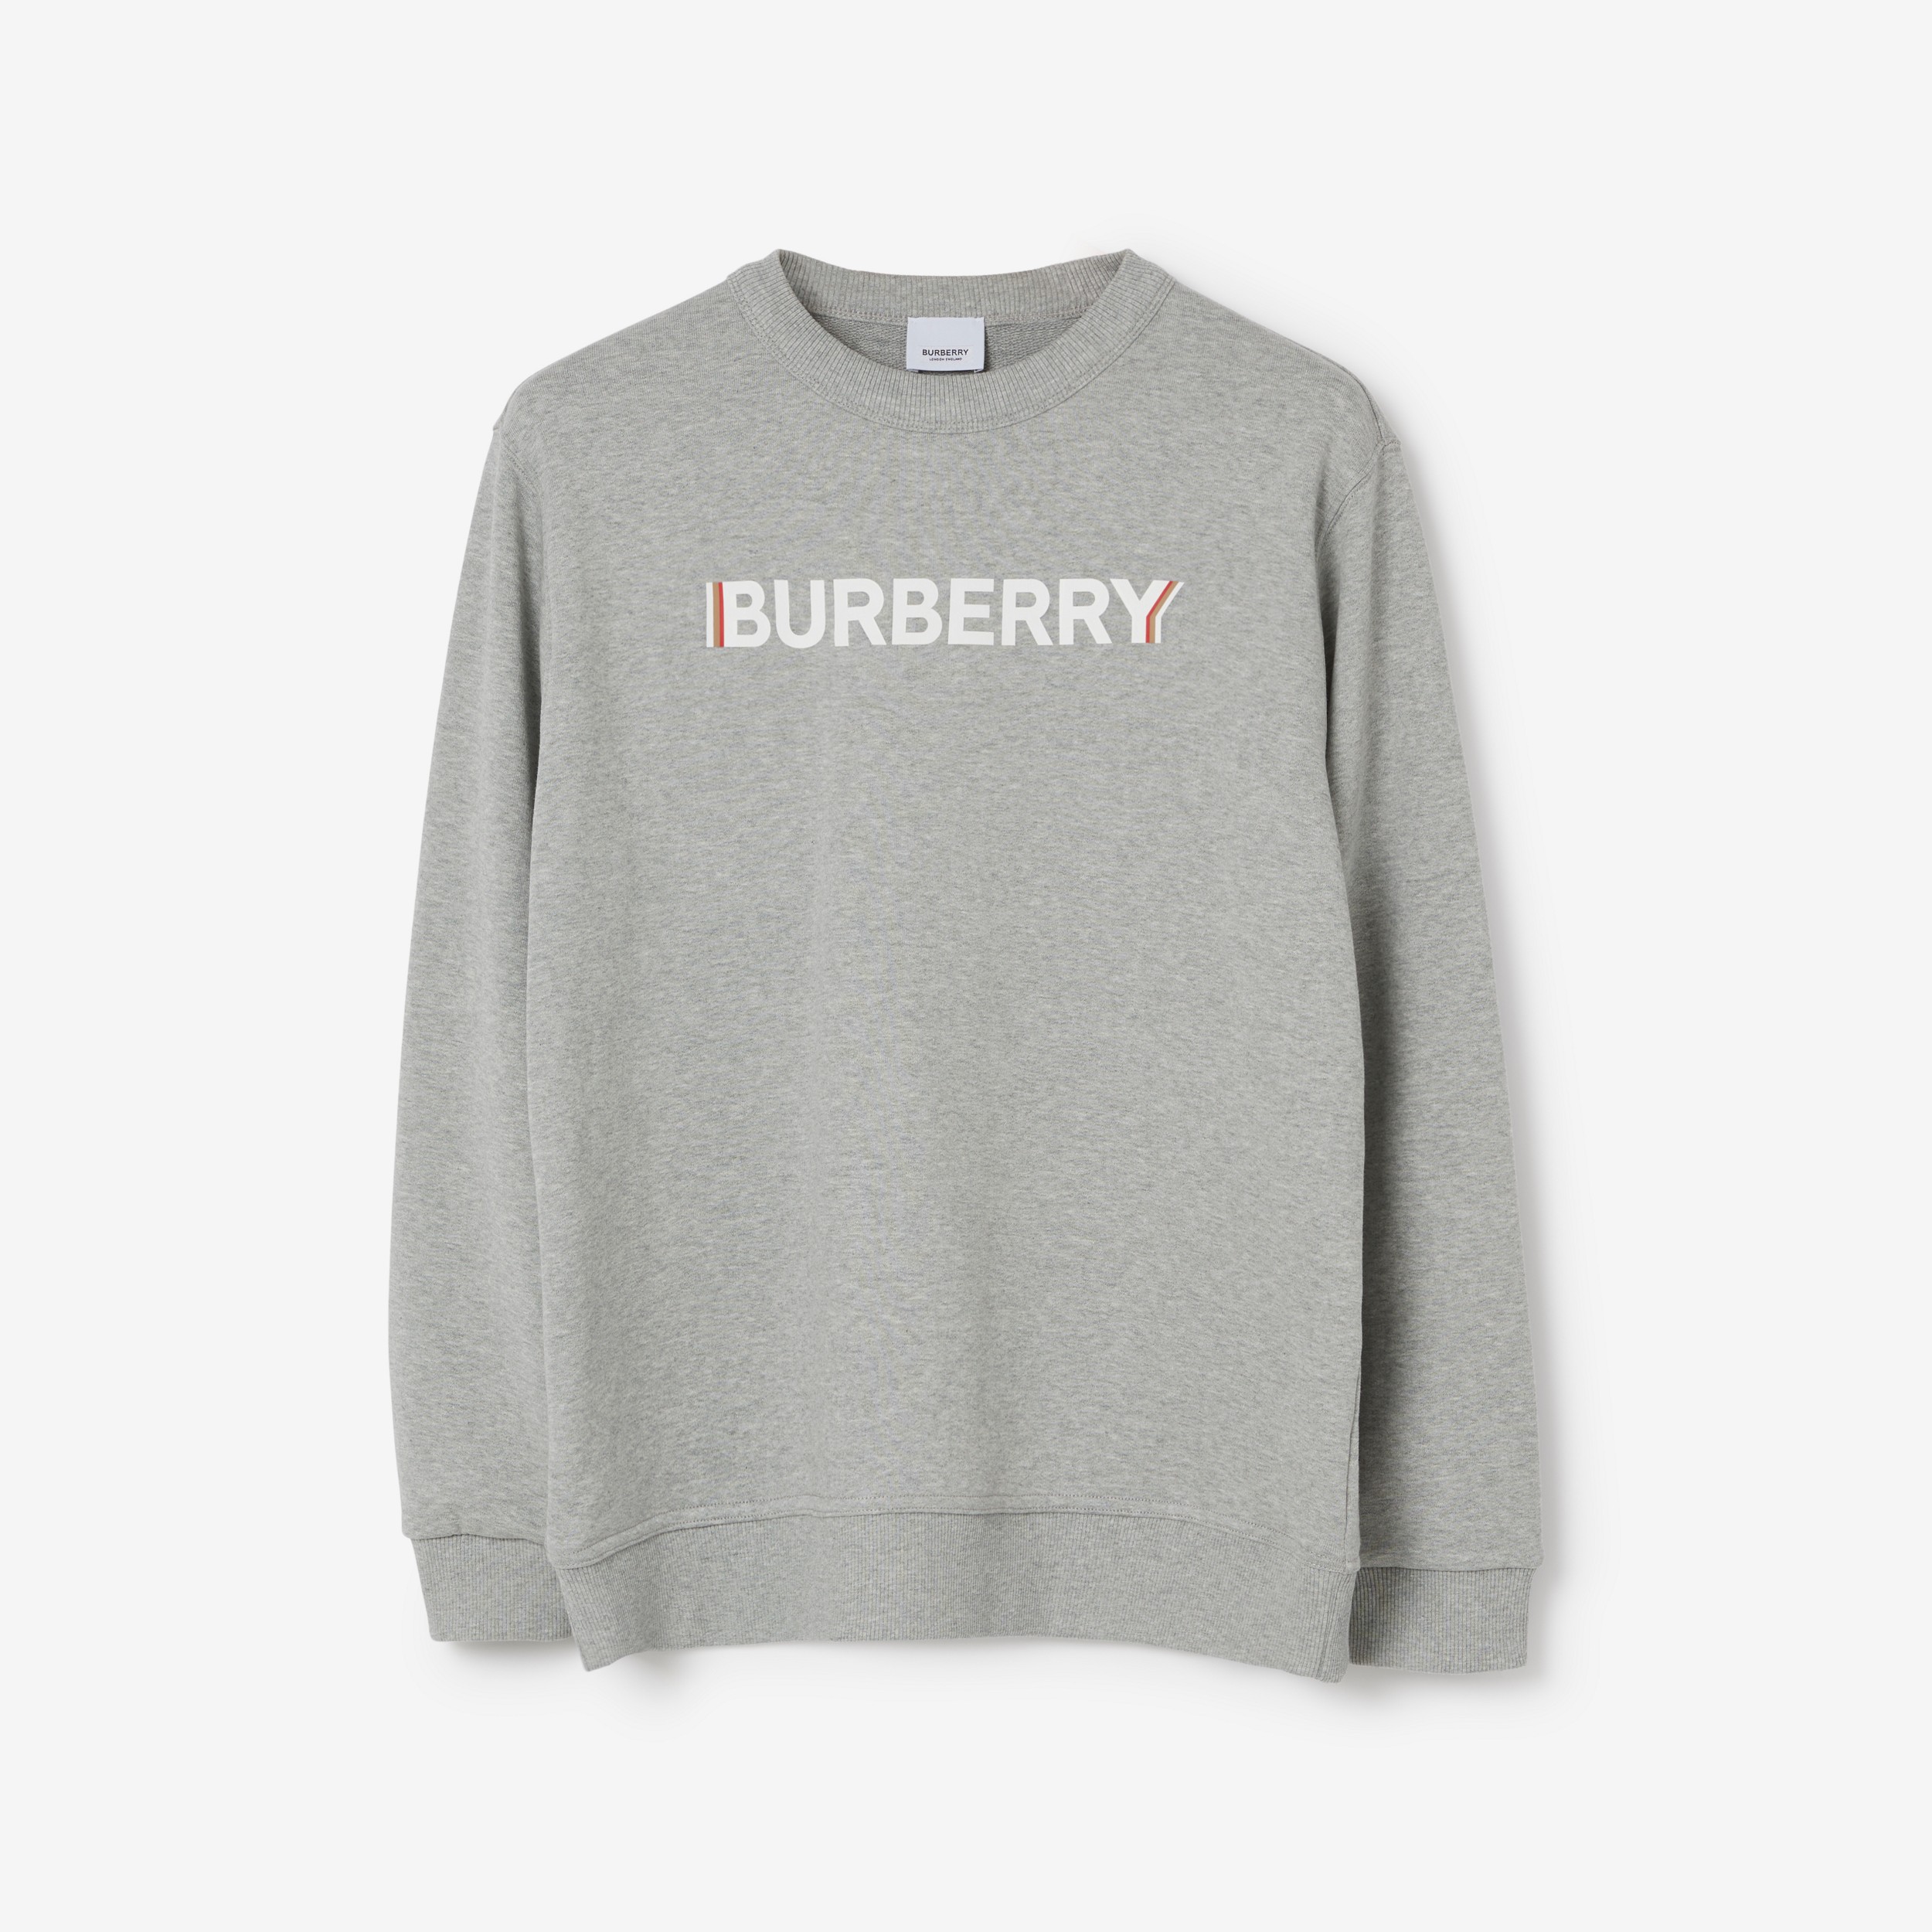 Baumwollsweatshirt mit Burberry-Logo (Hellgrau Meliert) - Herren | Burberry® - 1